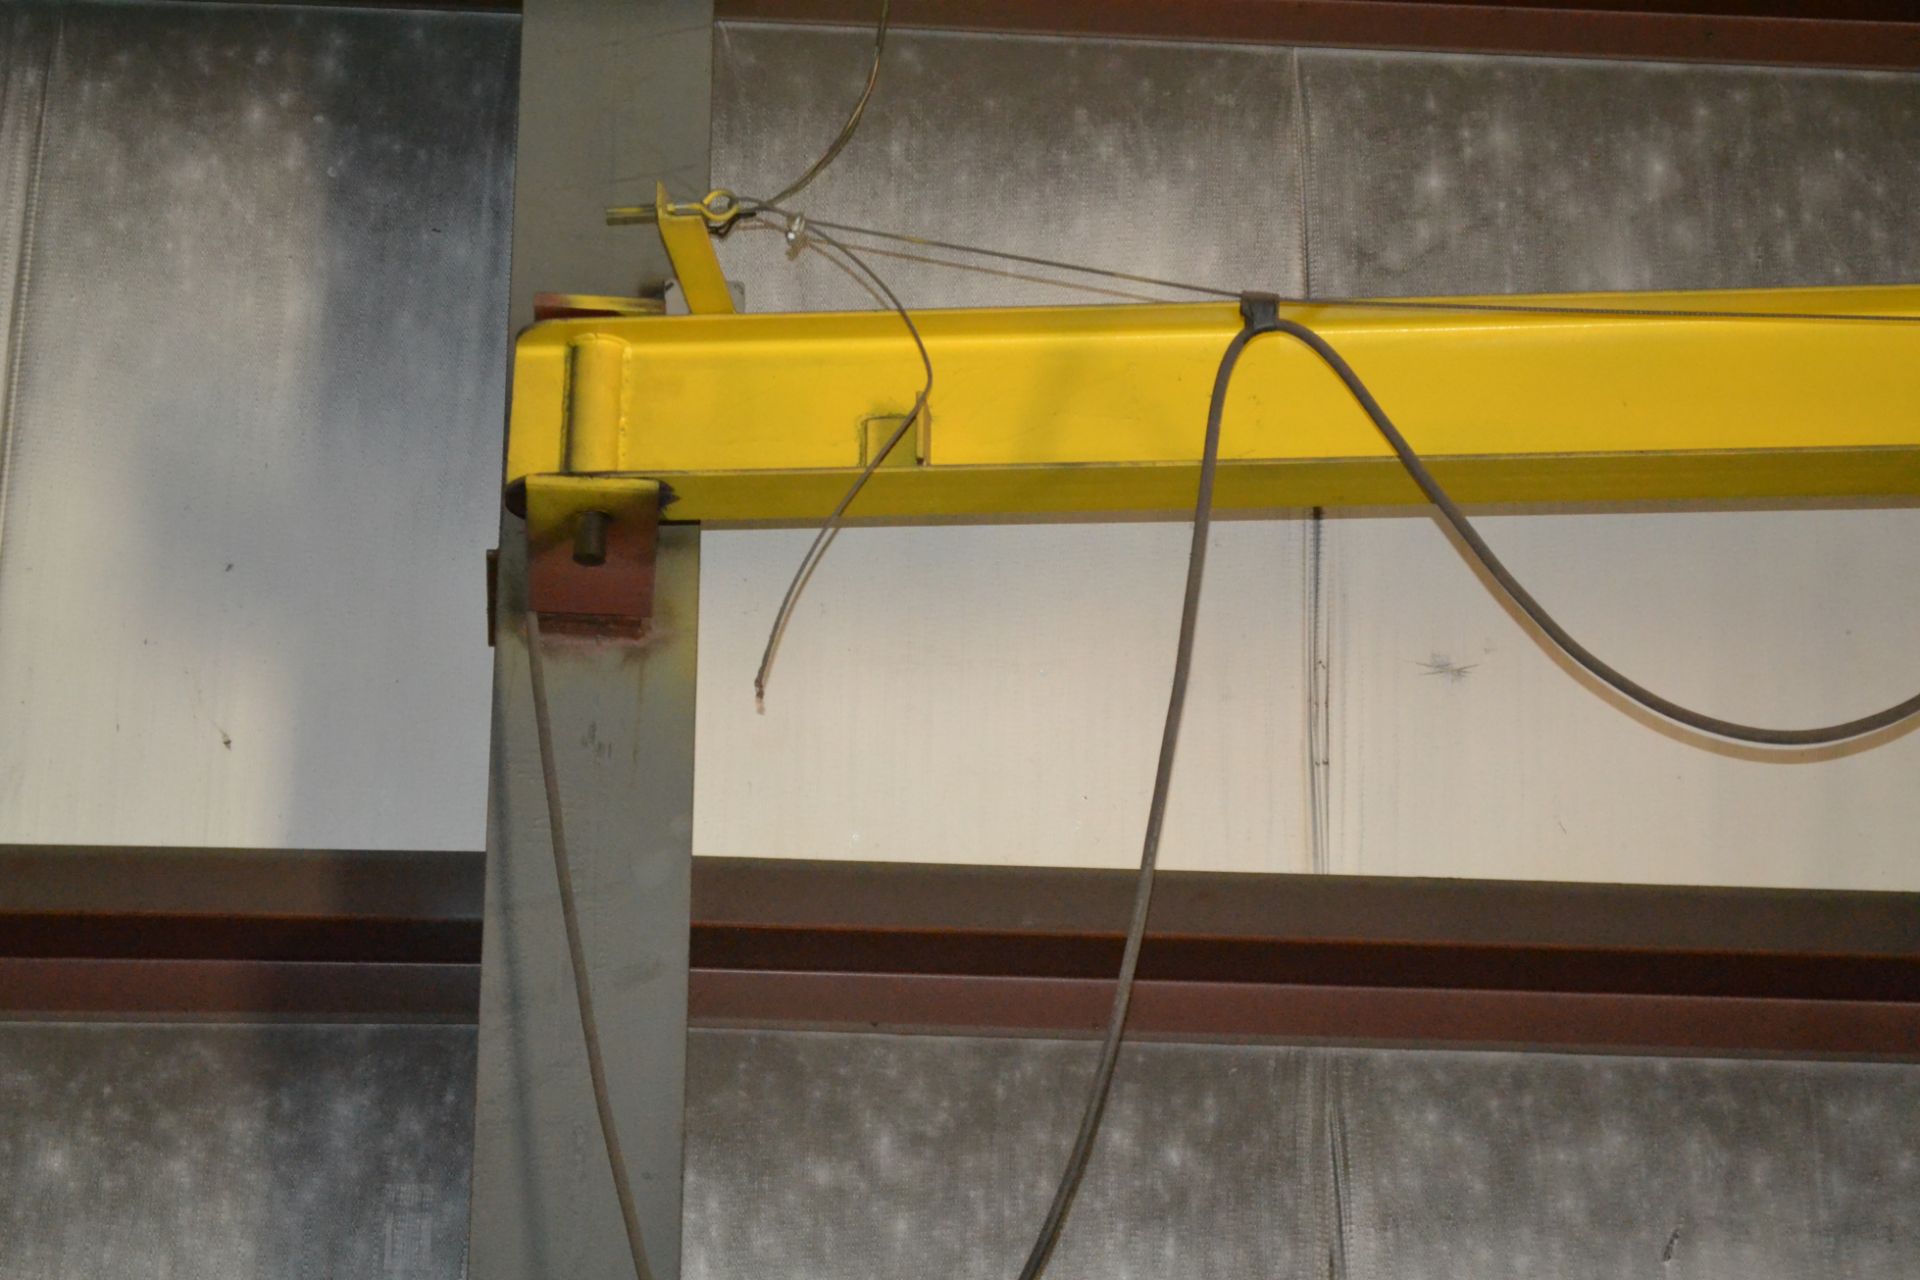 1-Ton Post Mounted Jib Crane, Approximately 21', With 1-Ton Yale Electric Hoist - Image 3 of 3